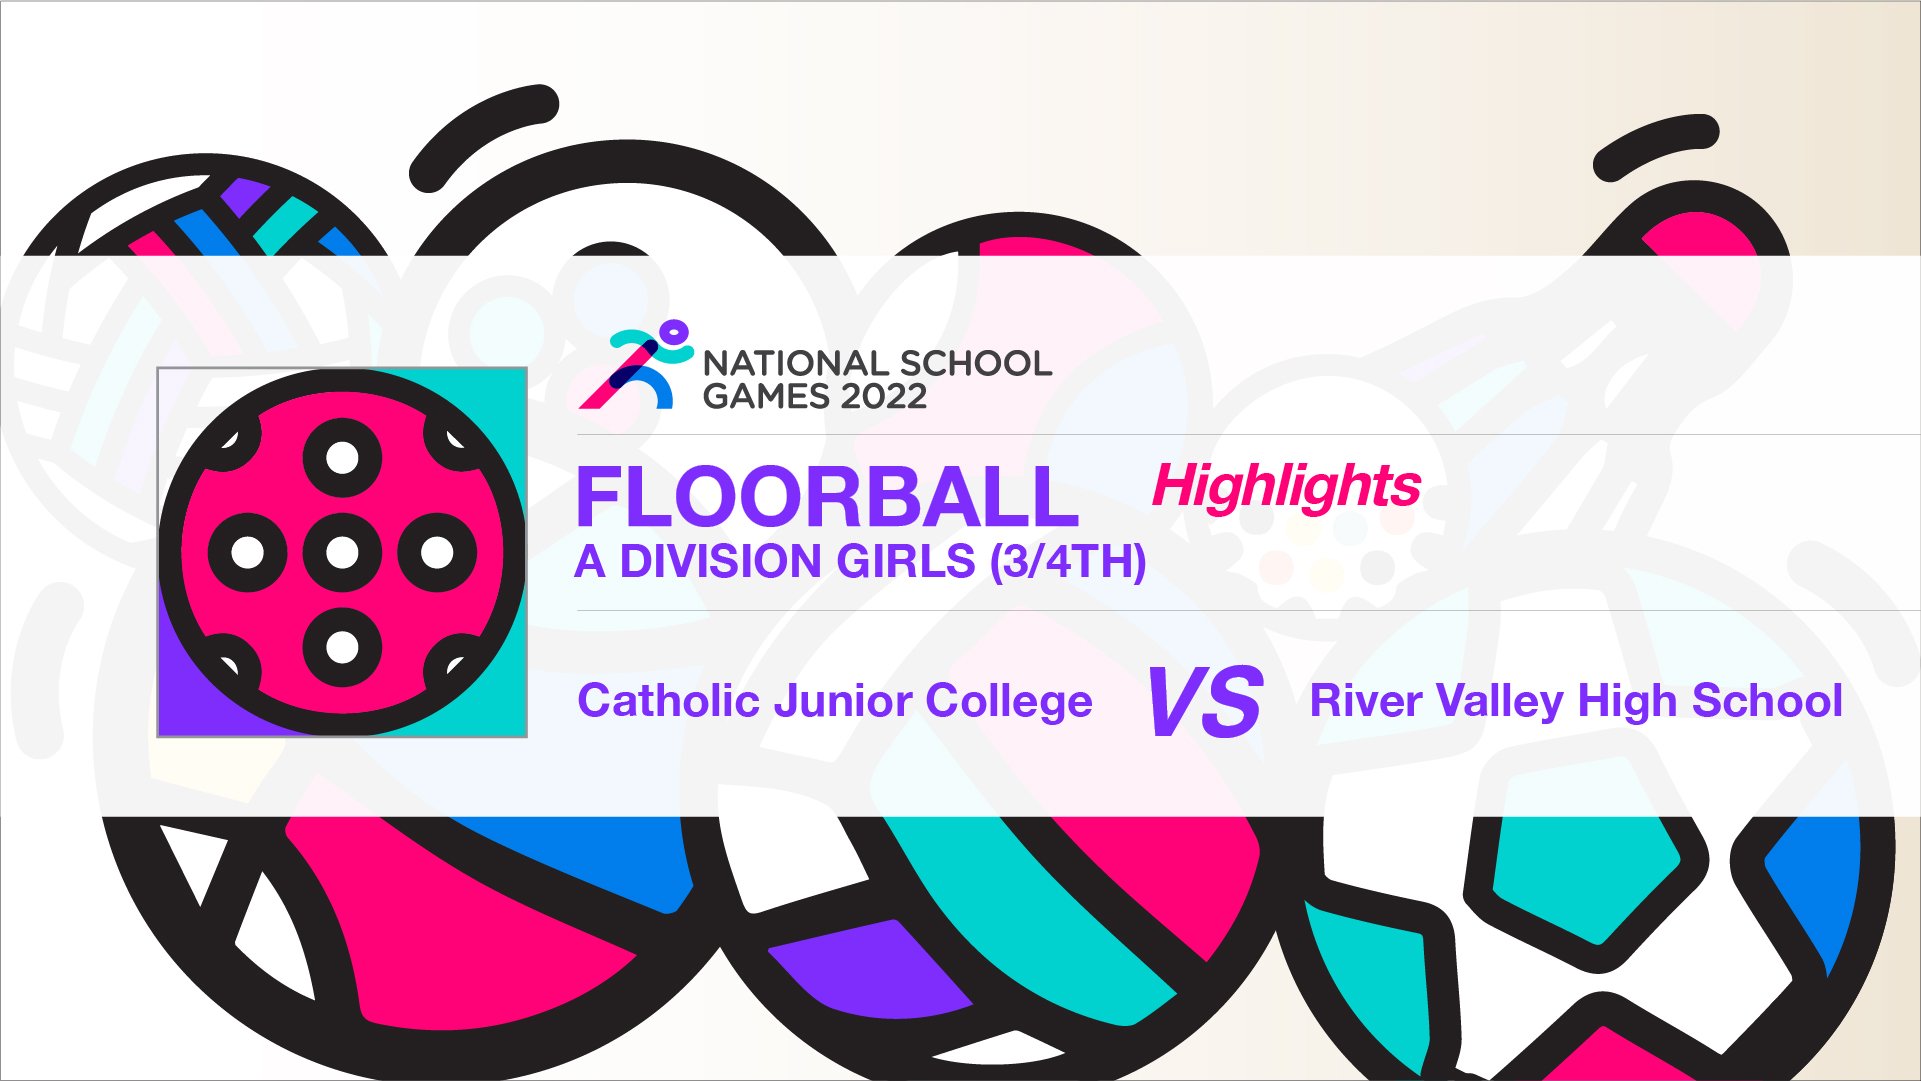 SSSC Floorball A Division Girls (3/4th) | Catholic Junior College vs River Valley High School - Highlights